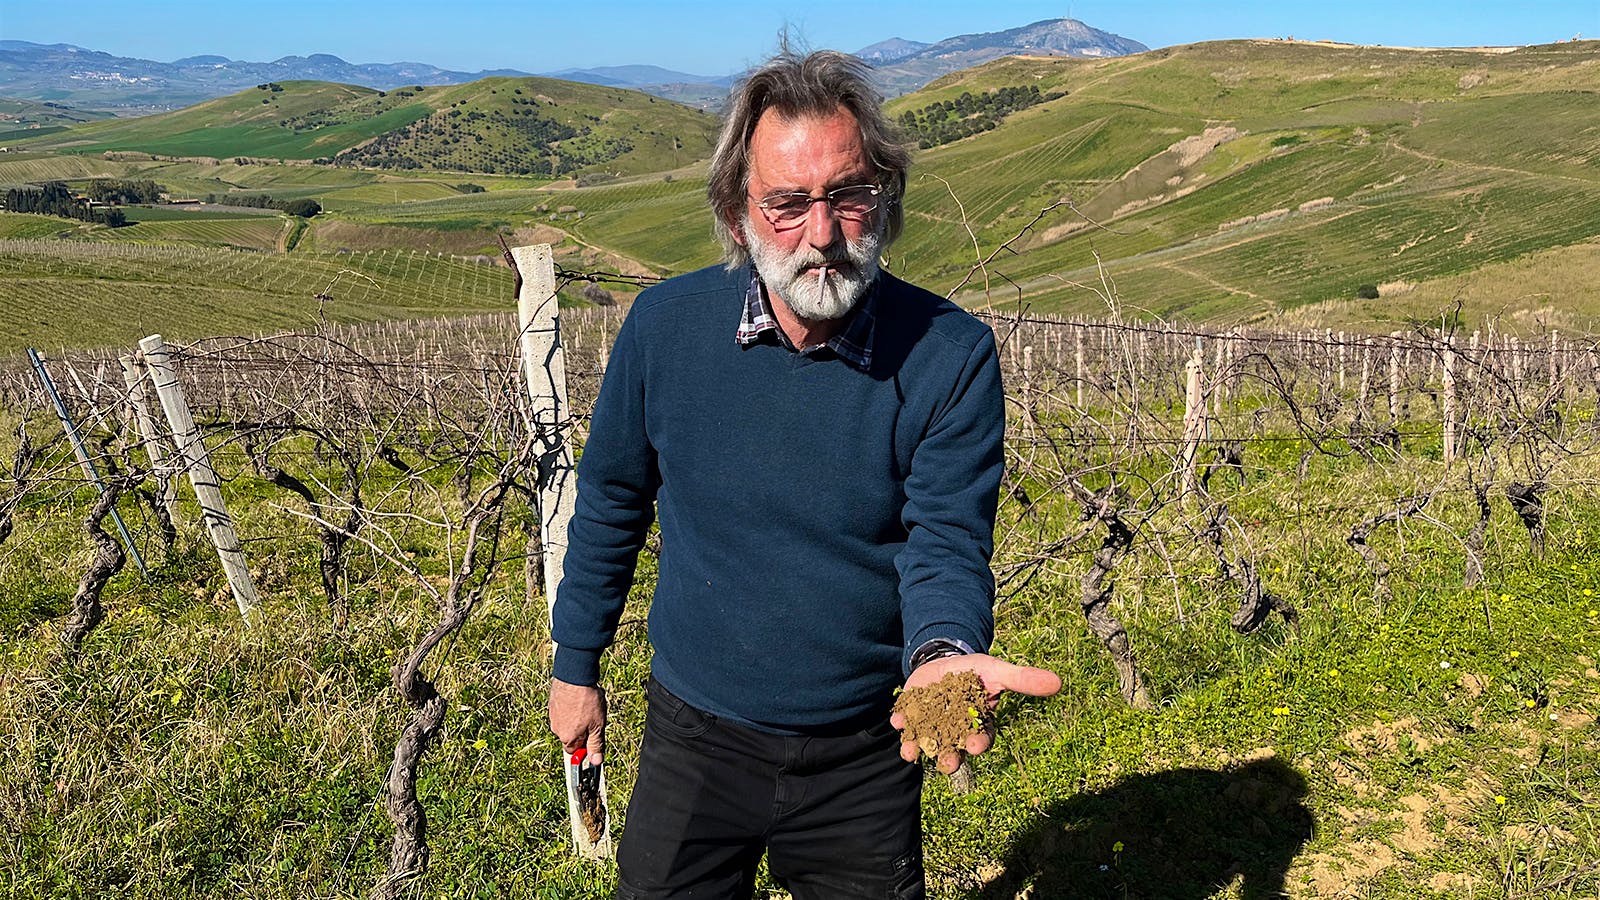 In Sicily: A Farmer-Gentleman’s Nuanced Wine World